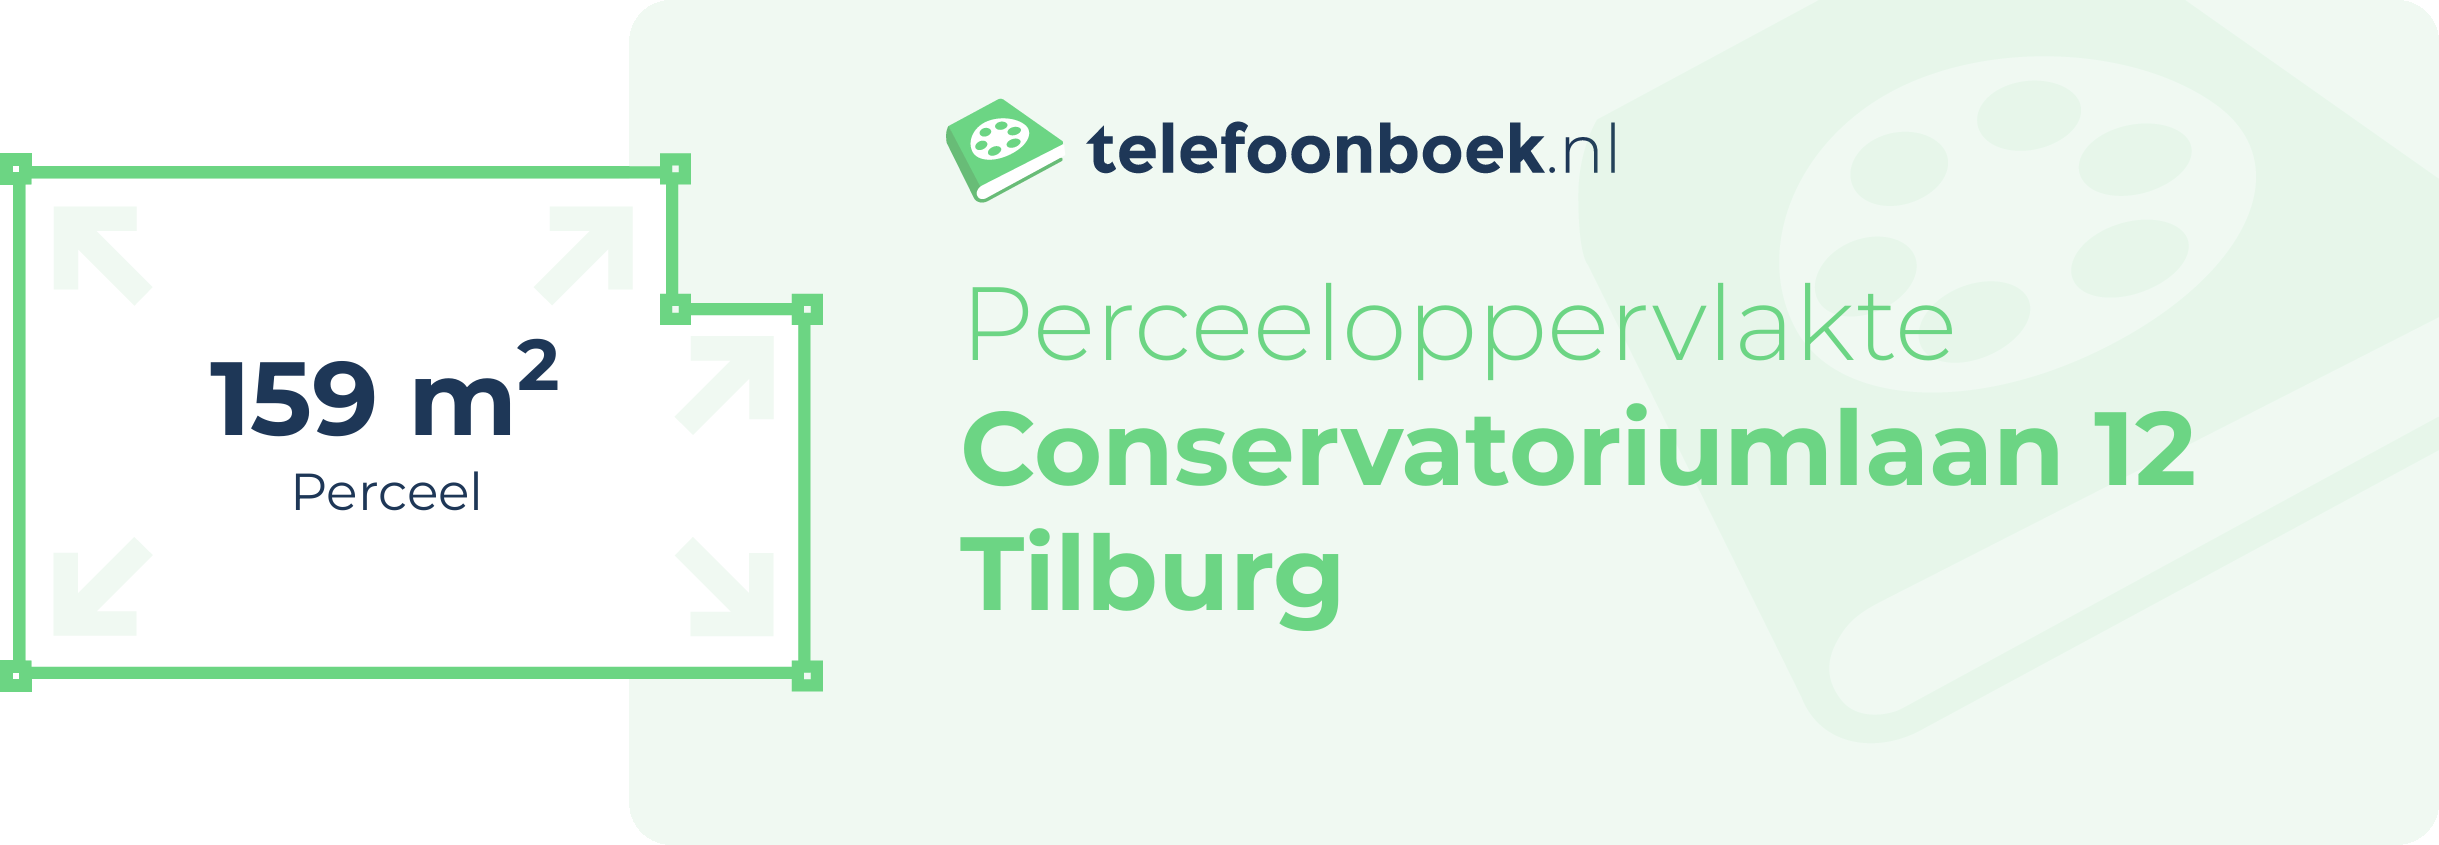 Perceeloppervlakte Conservatoriumlaan 12 Tilburg